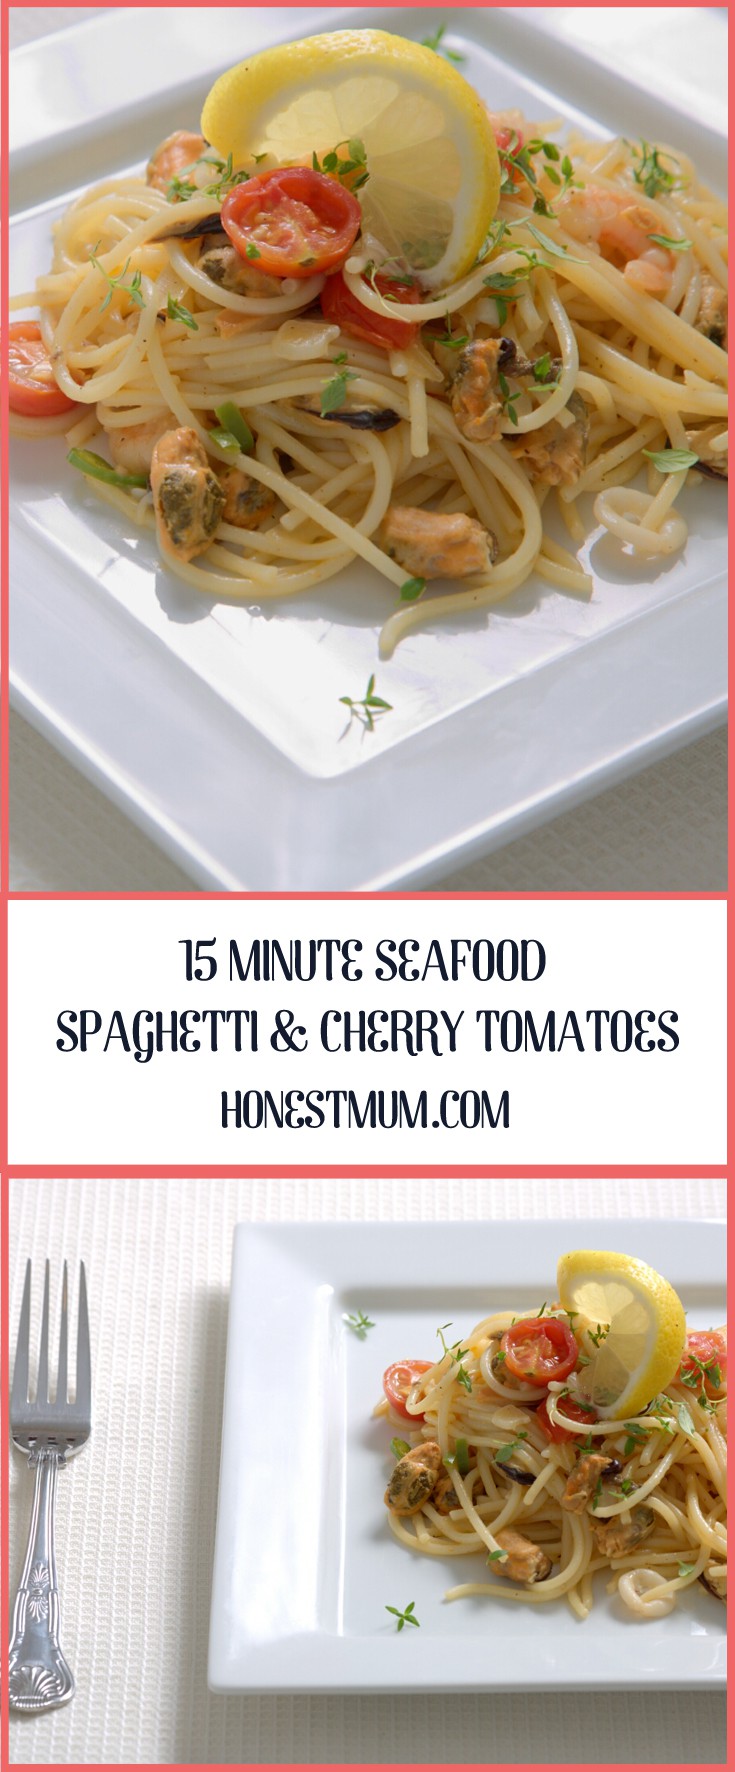 15 Minute Seafood Spaghetti & Cherry Tomatoes